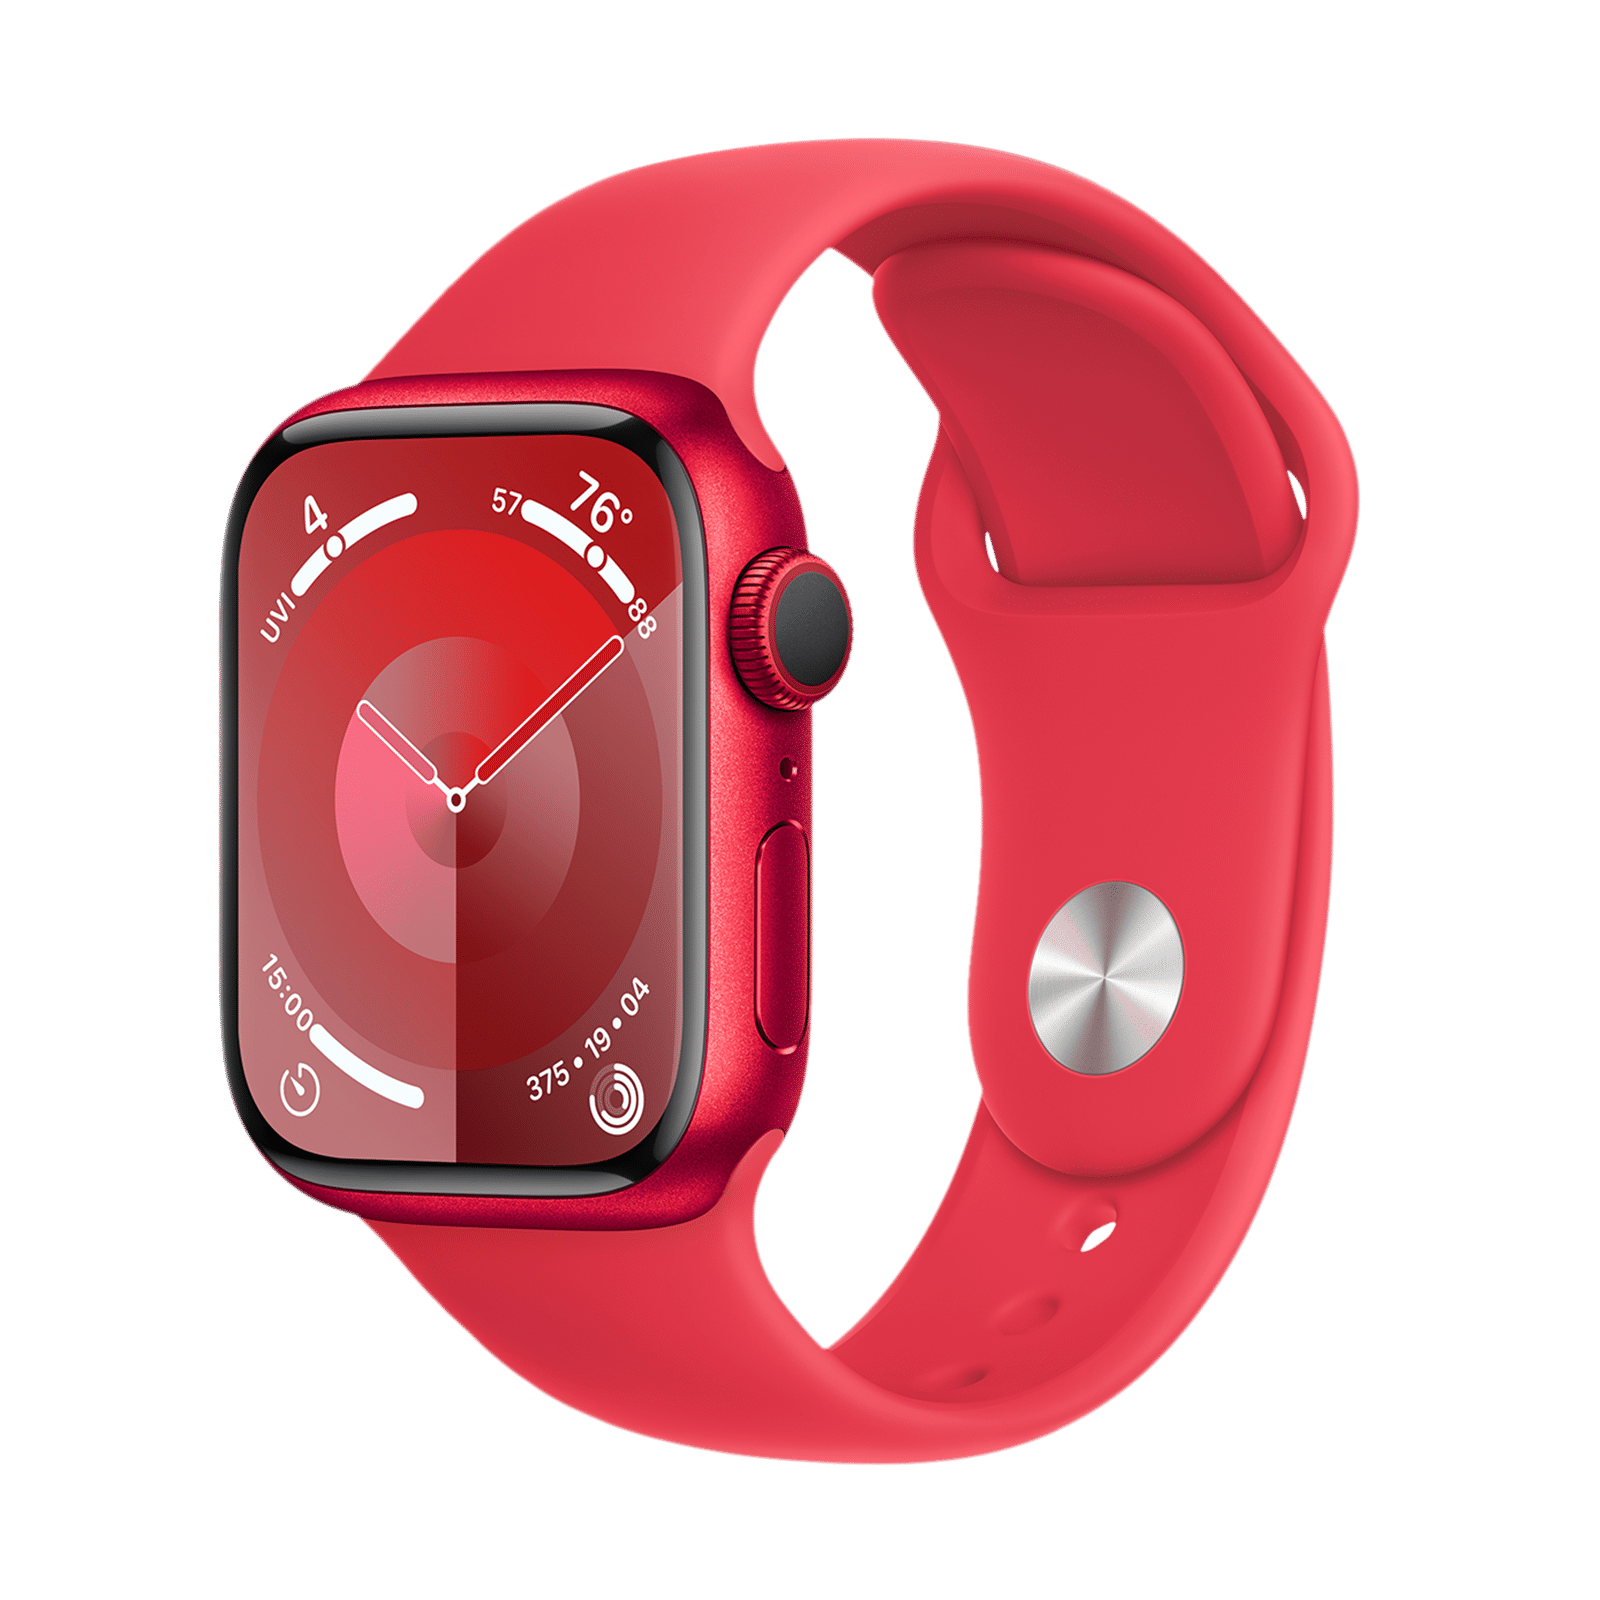 Garmin Fenix 5, Forerunner 935, Vivofit Jr and Vivosmart 3 smart watches  now available on Croma, Flipkart | Technology News - The Indian Express